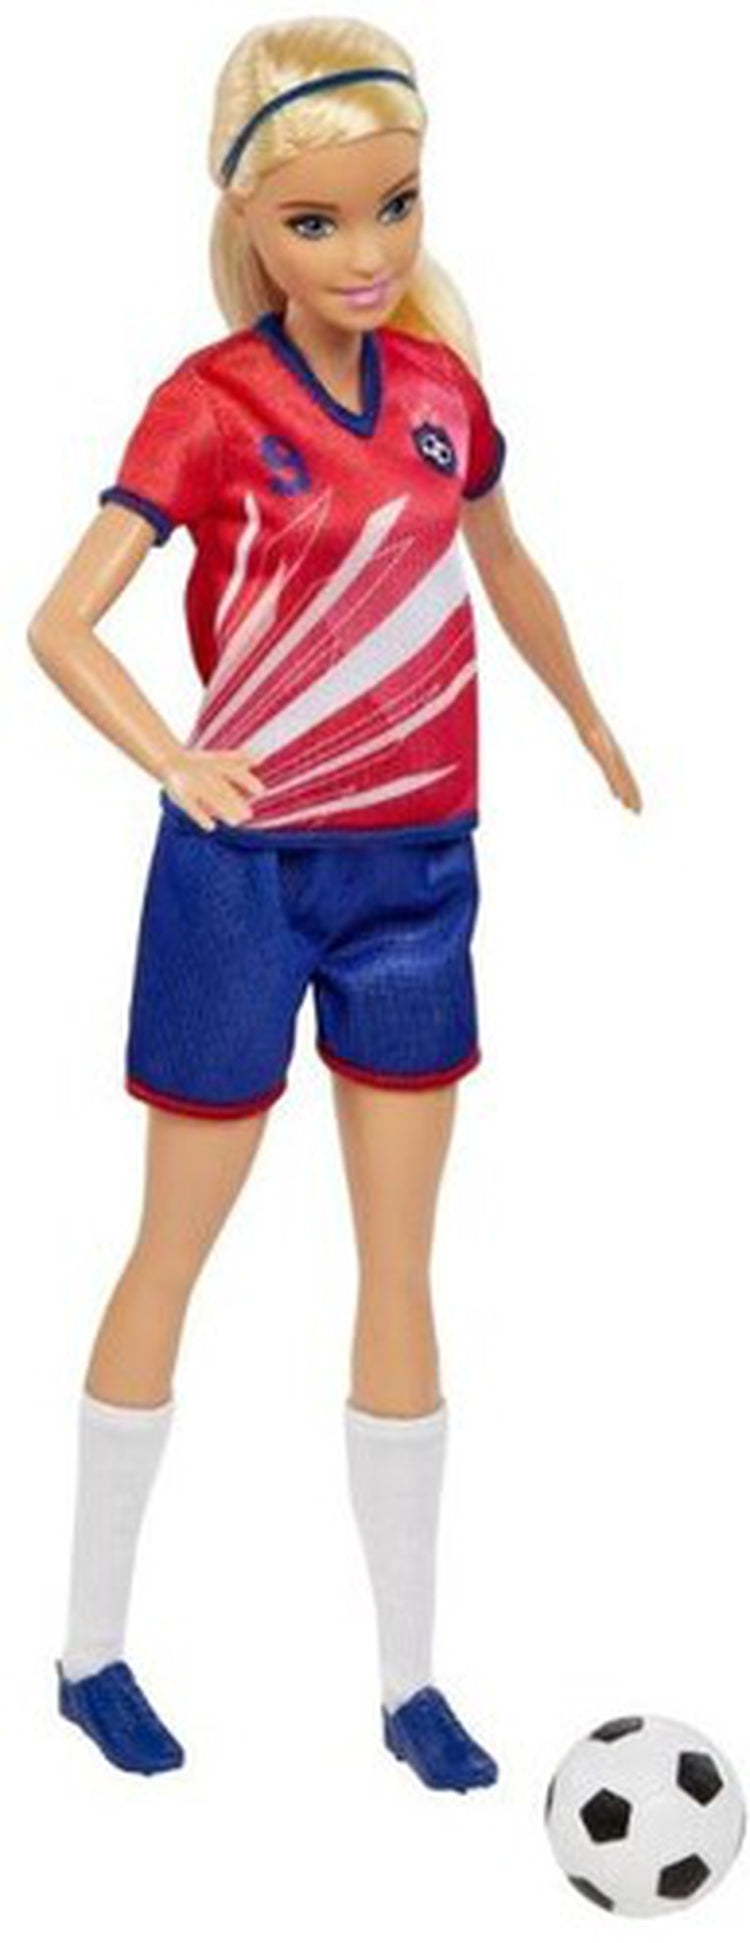 Mattel - Barbie I Can Be Soccer Player, Blonde, Red & Blue Uniform